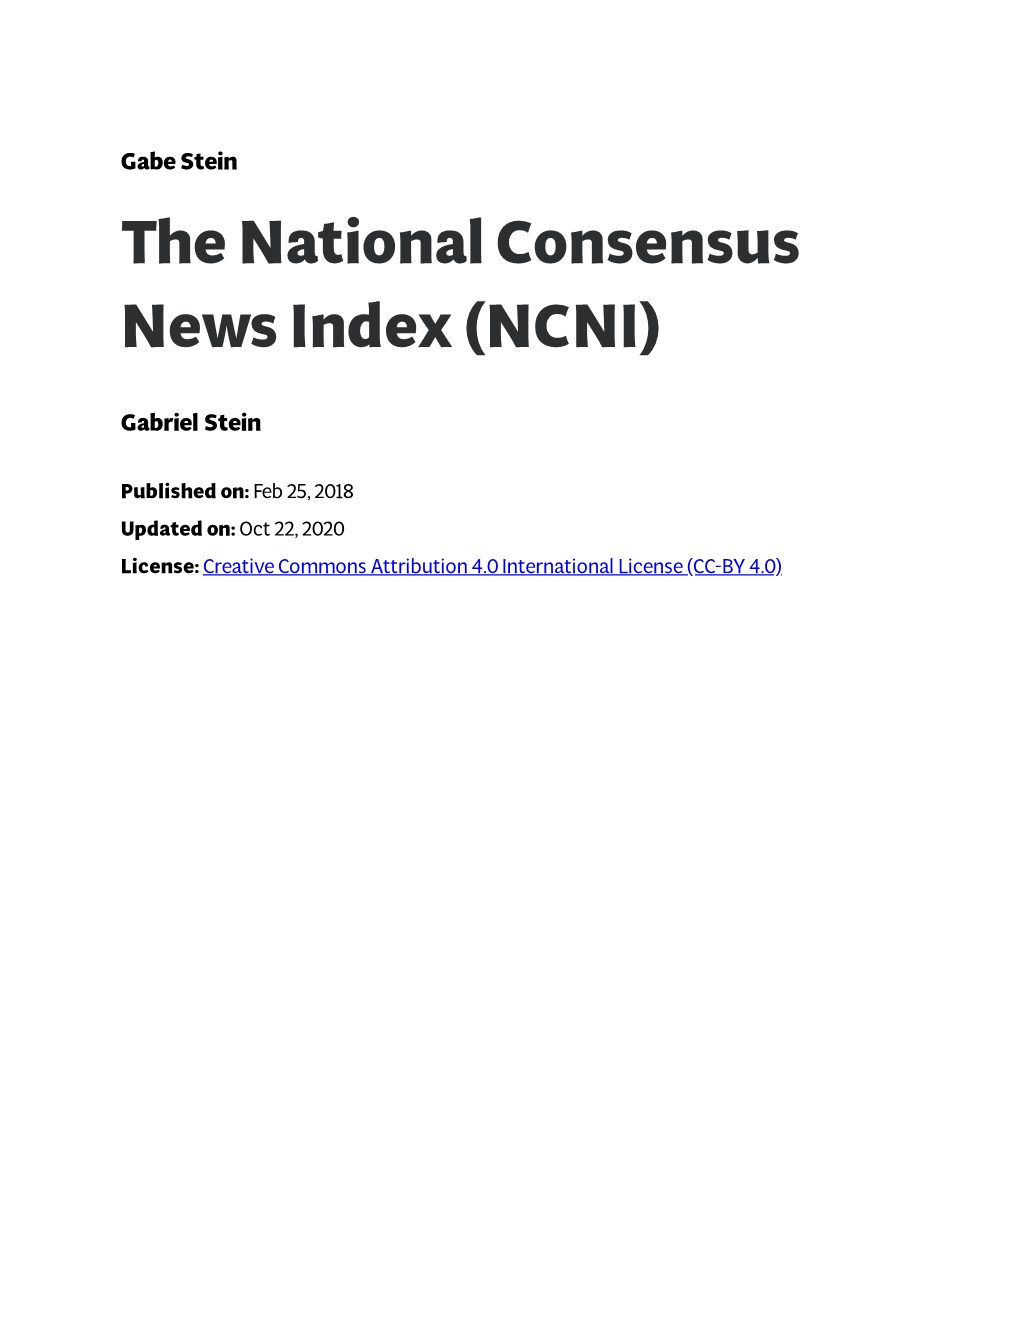 The National Consensus News Index (NCNI)